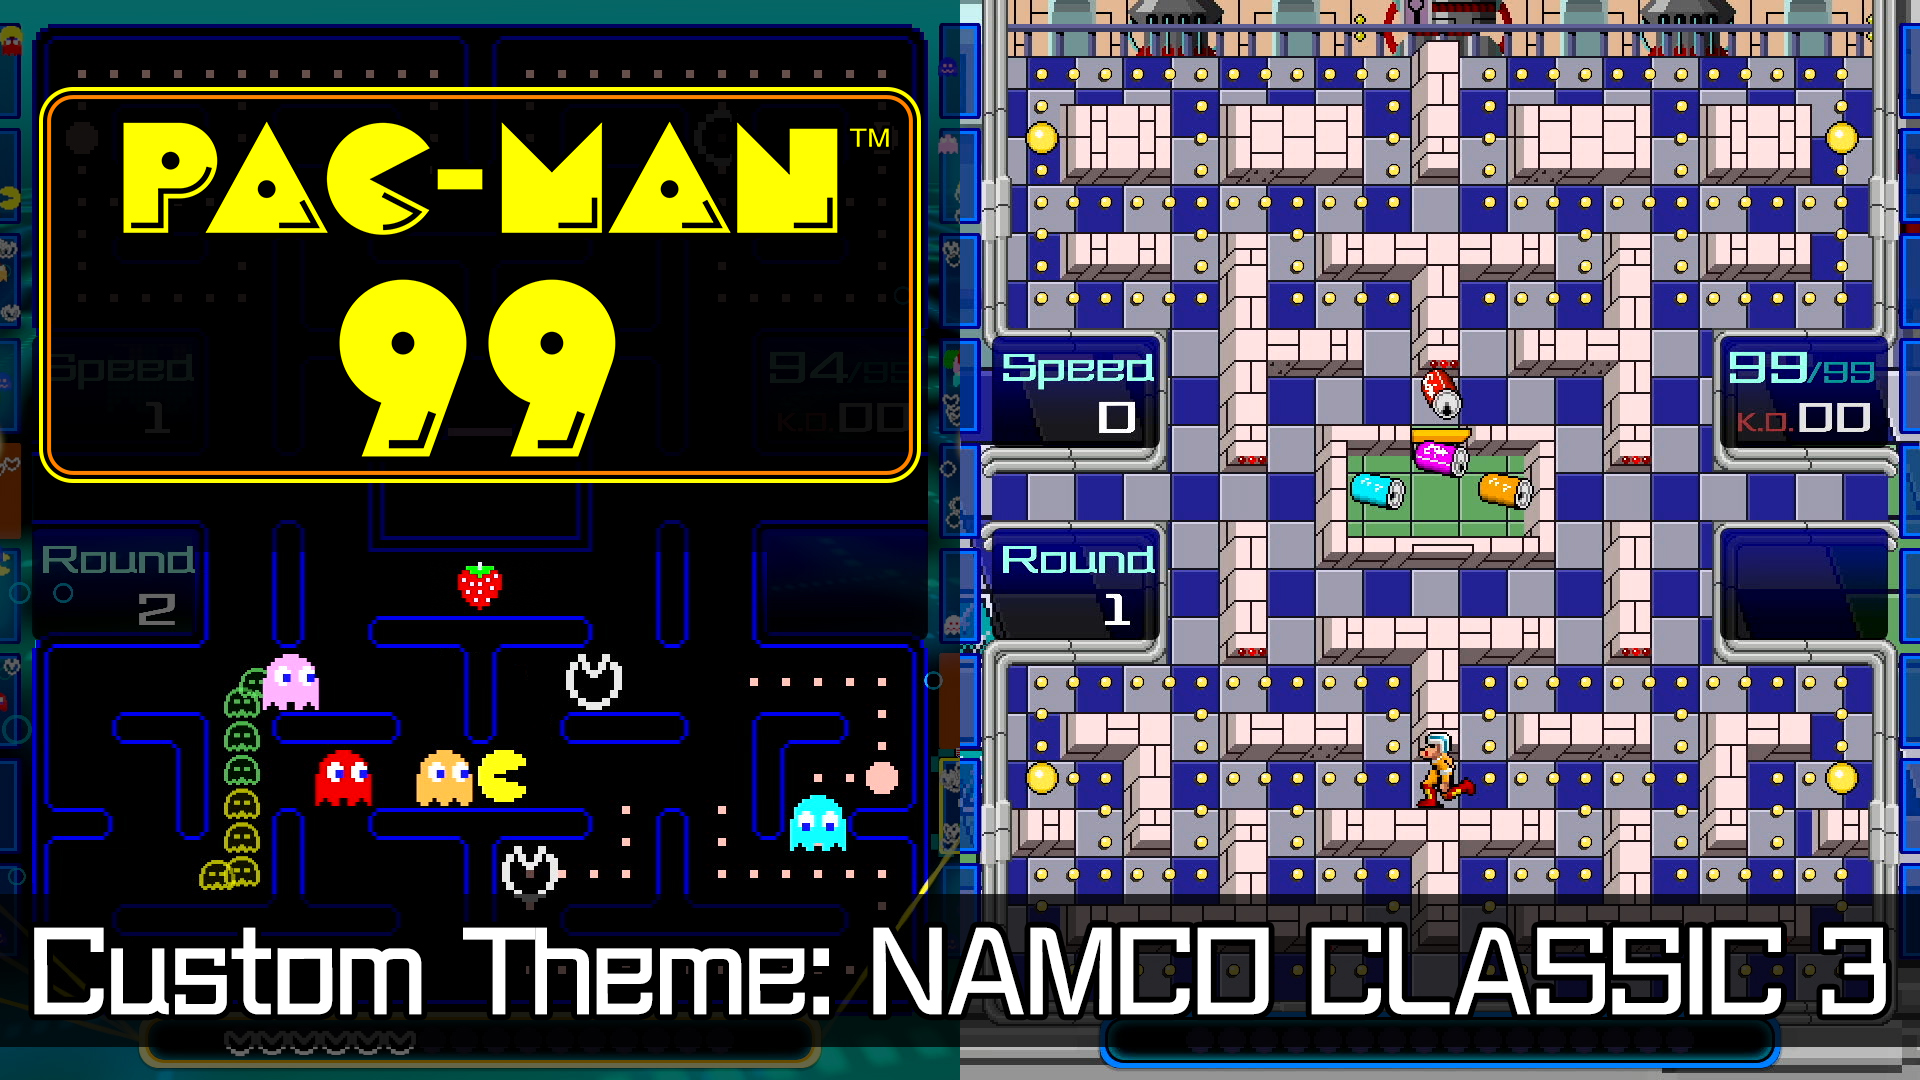 PAC-MAN 99 Custom Theme: NAMCO CLASSIC 3